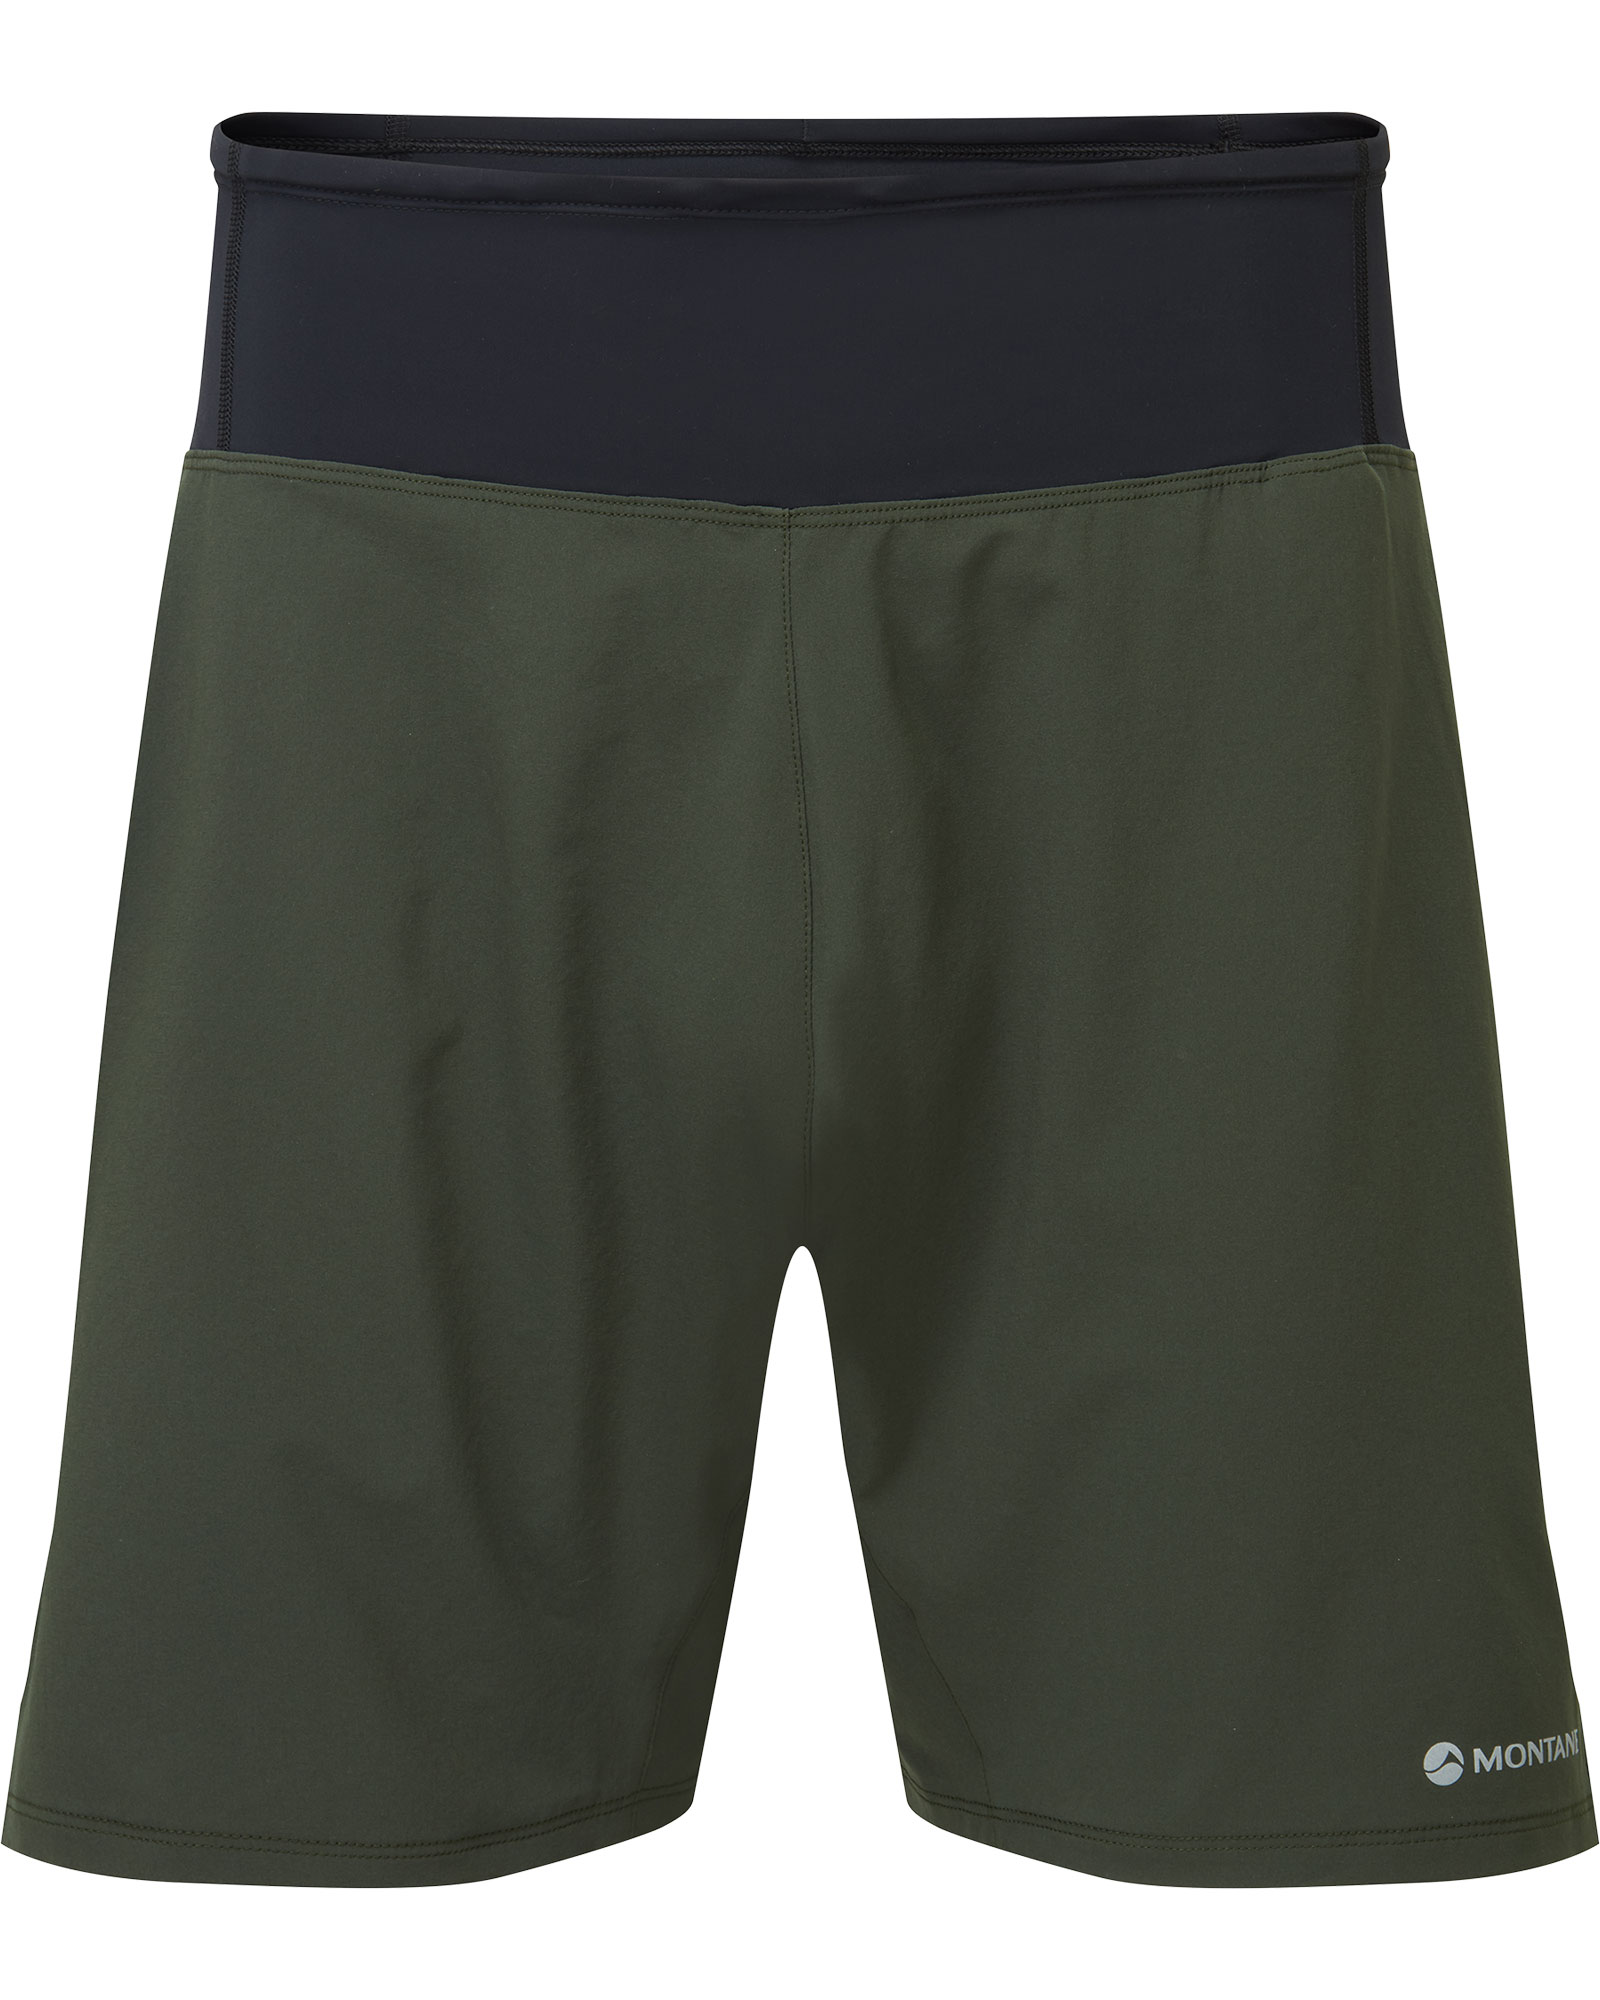 Montane Slipstream Men’s 7" Shorts - Oak Green XL